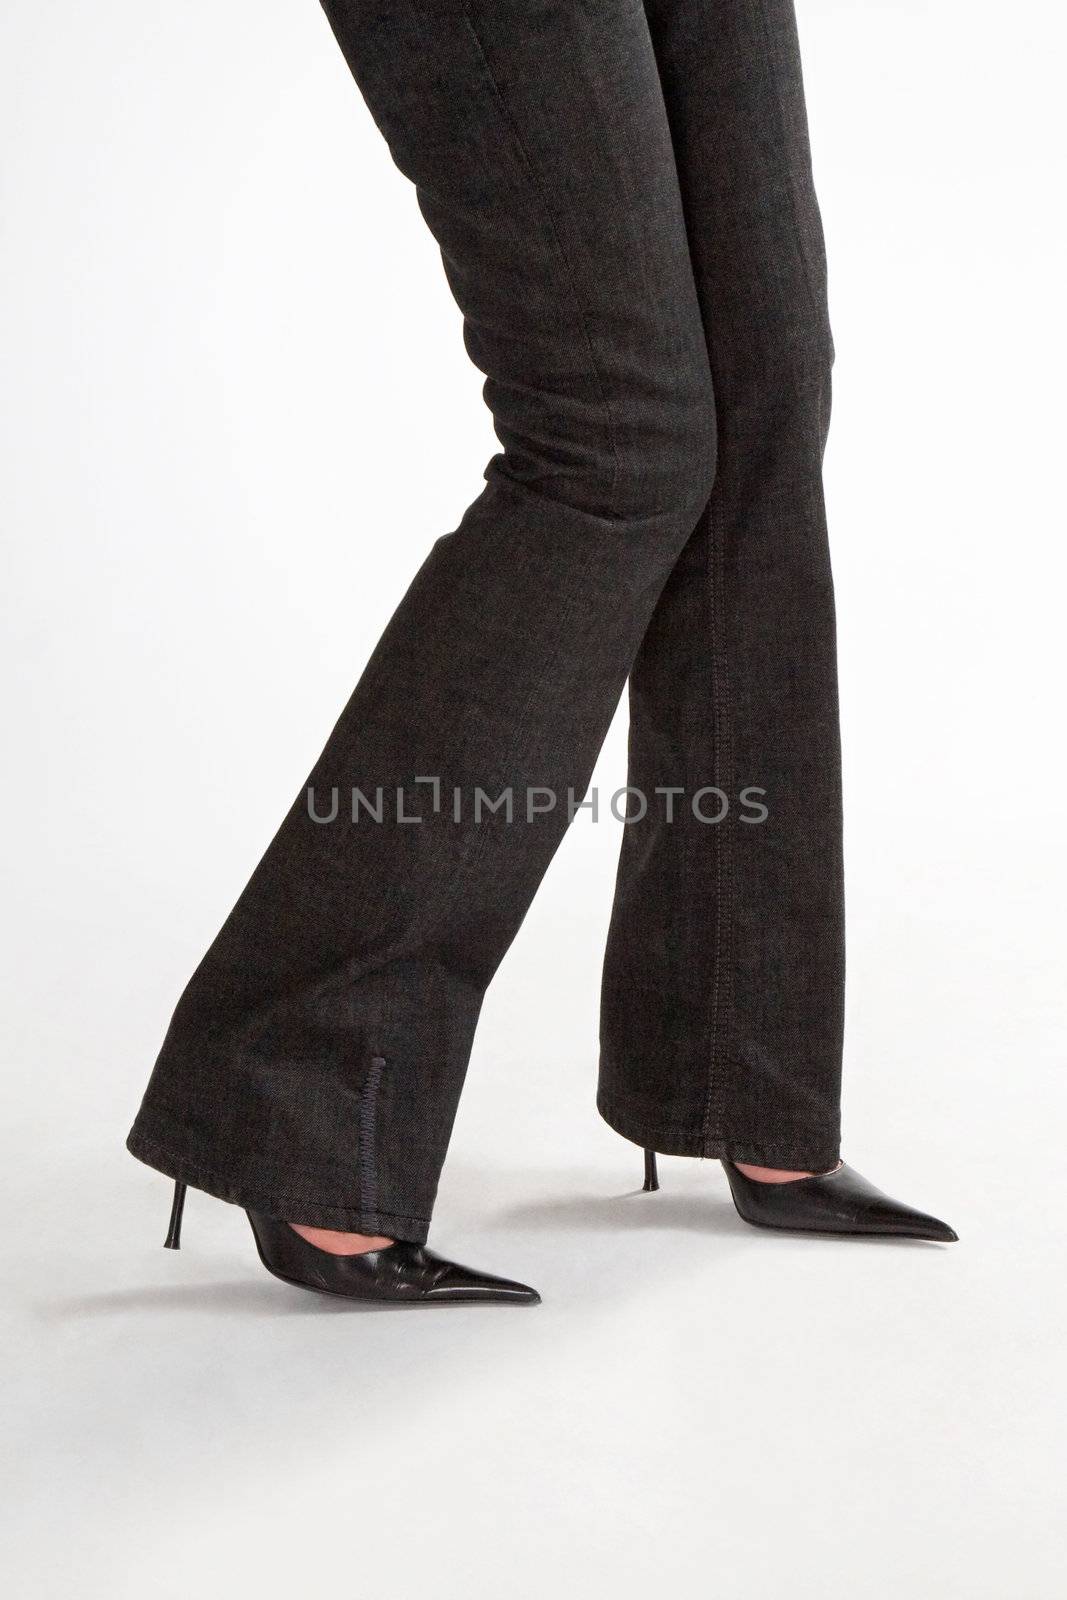 Glamour legs 18 by fotorobs